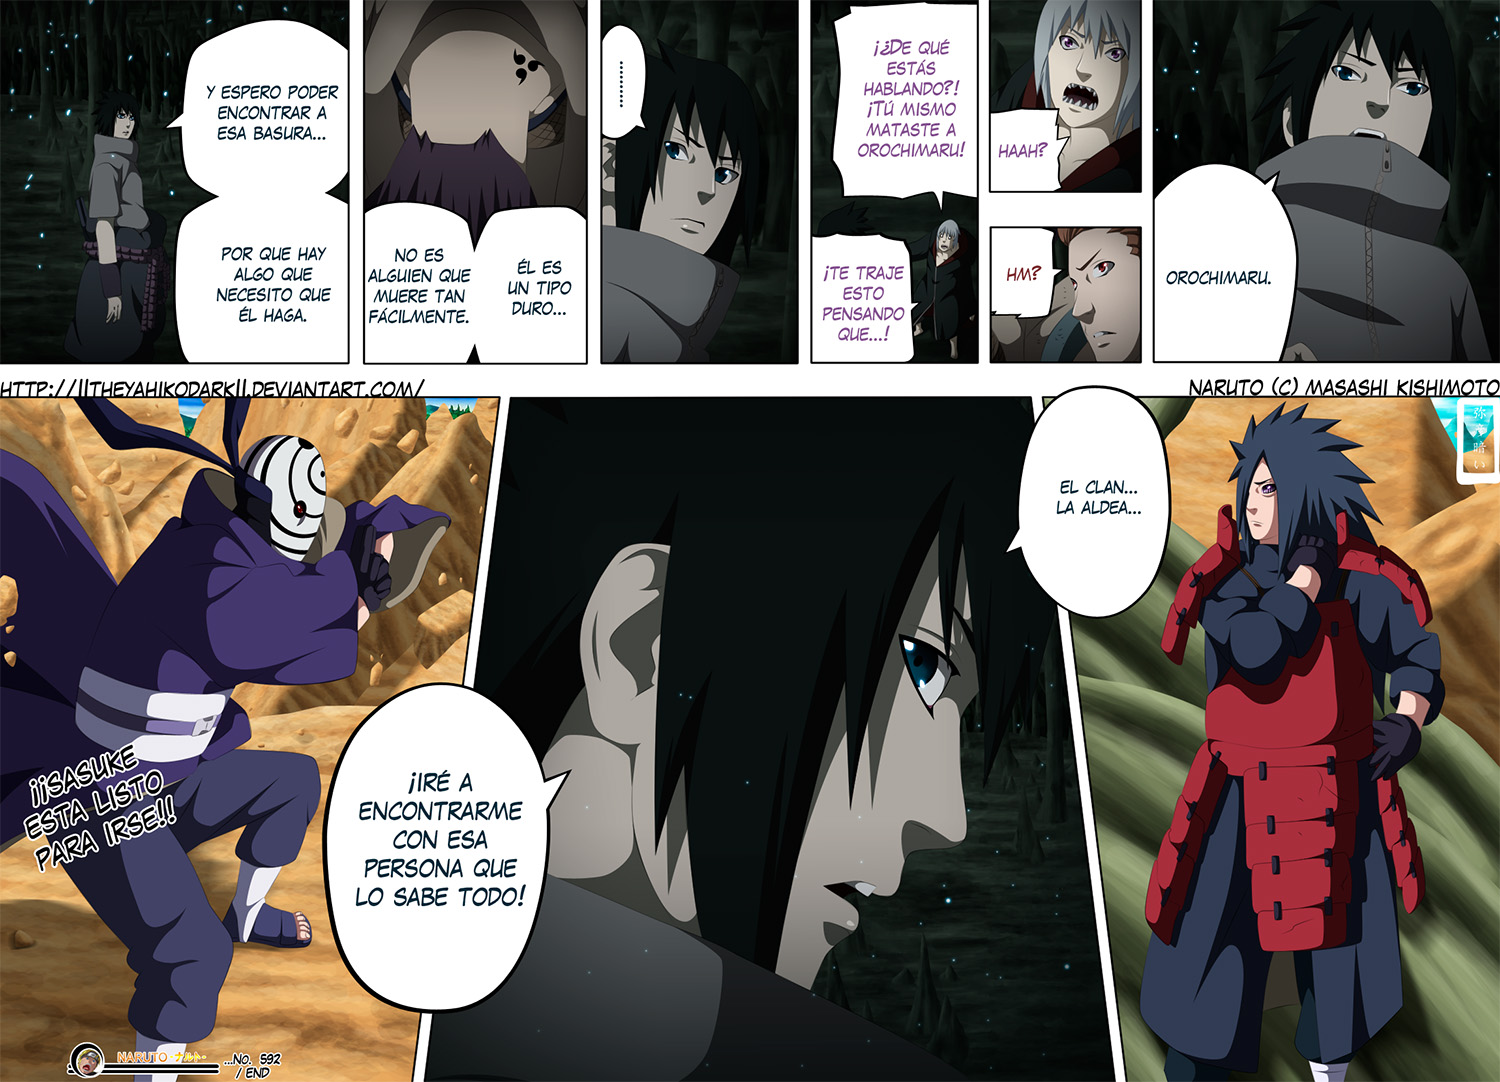 Sasuke Goes To Orochimaru Madara S Edo Tensei Stays Naruto 592 Daily Anime Art